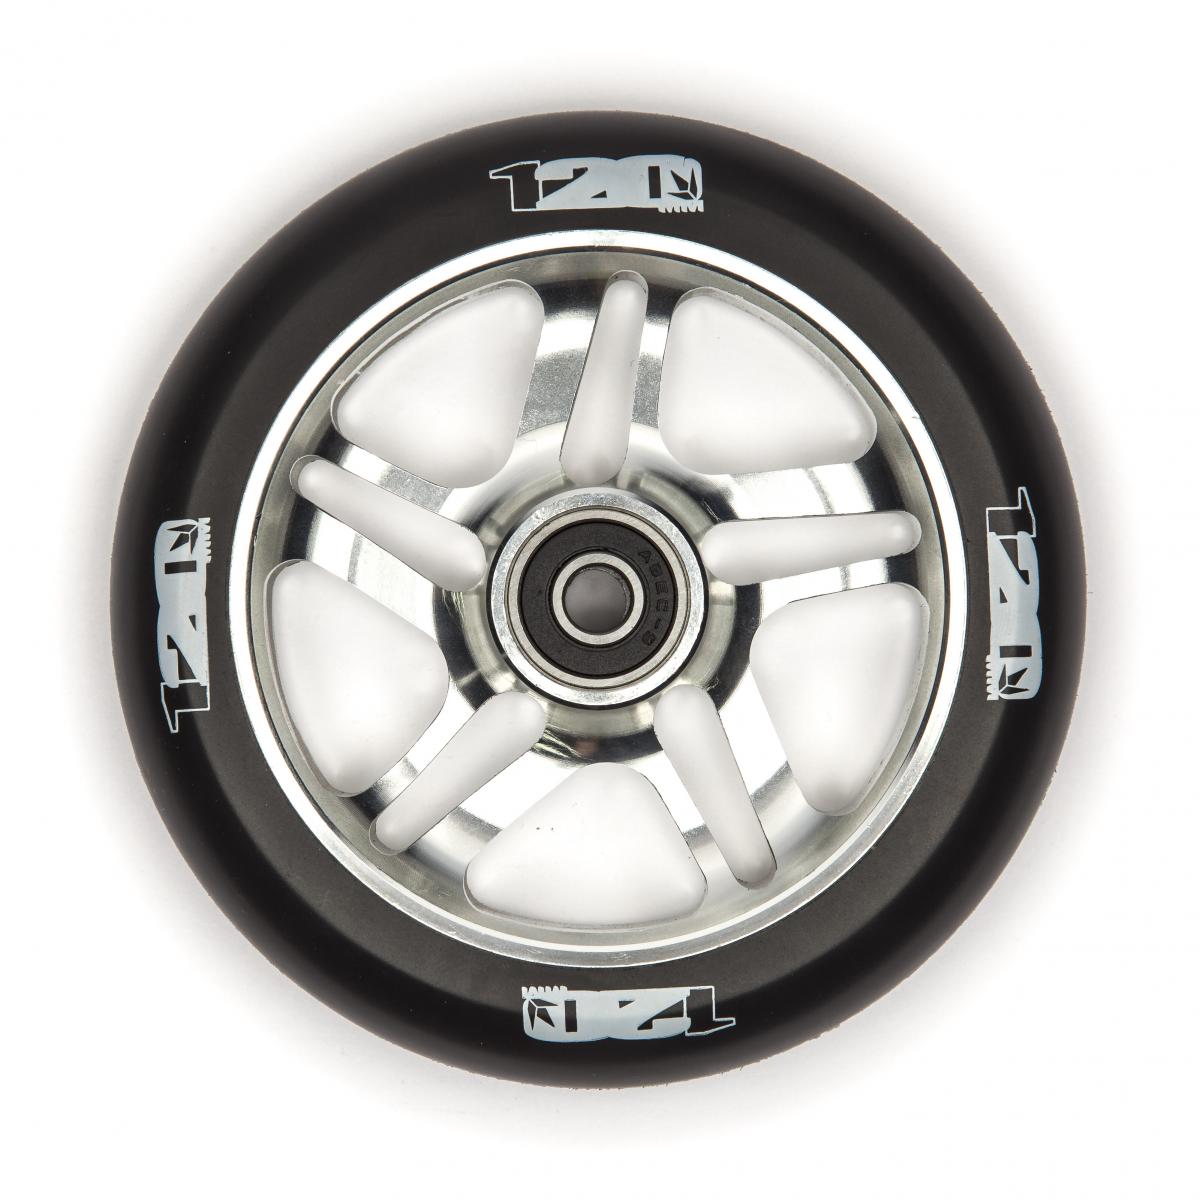 Envy 5 Spoke 120mm (PAIR) - Scooter Wheels Chrome